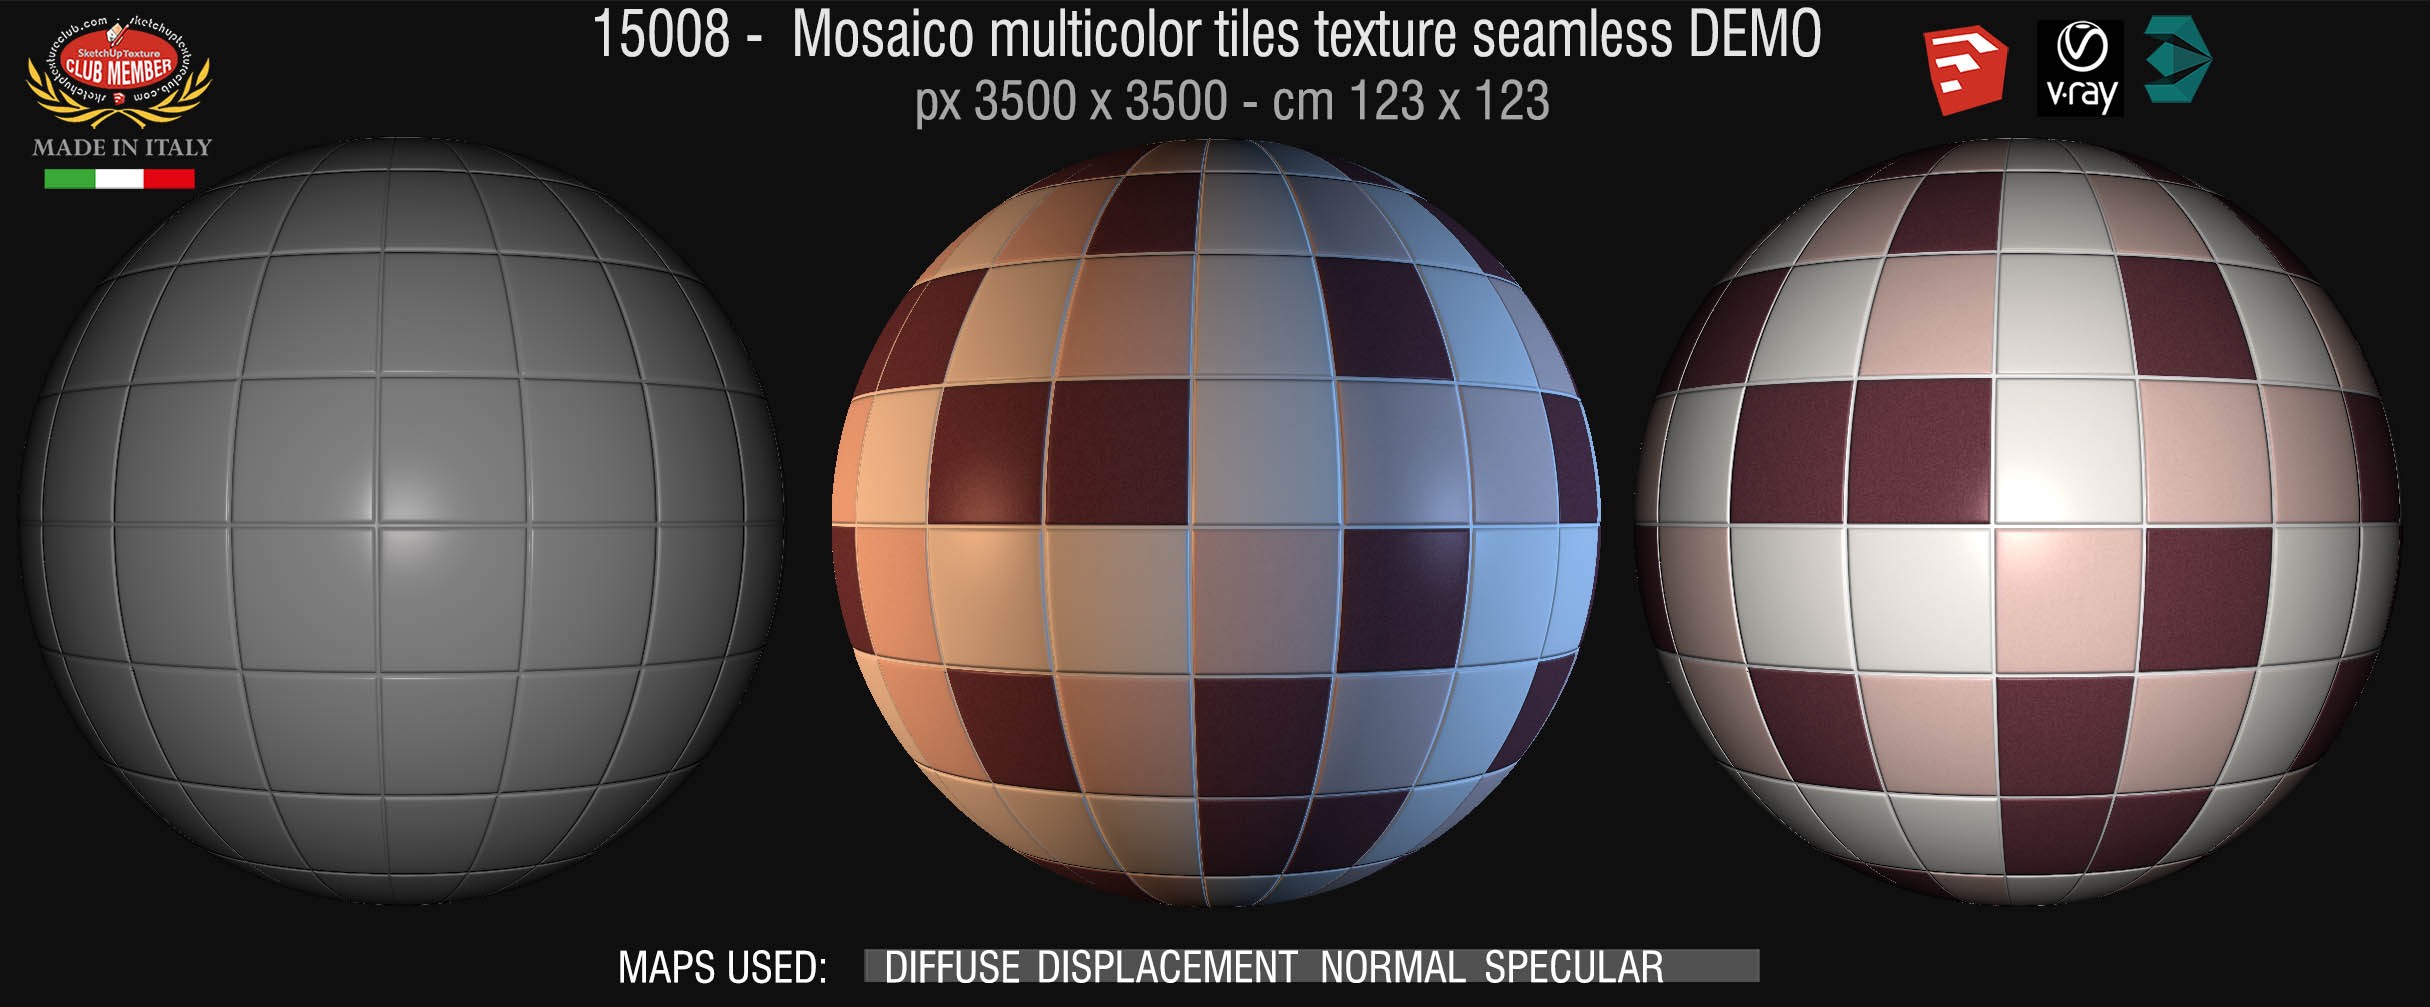 15008 Mosaico multicolor tiles texture seamless + maps DEMO